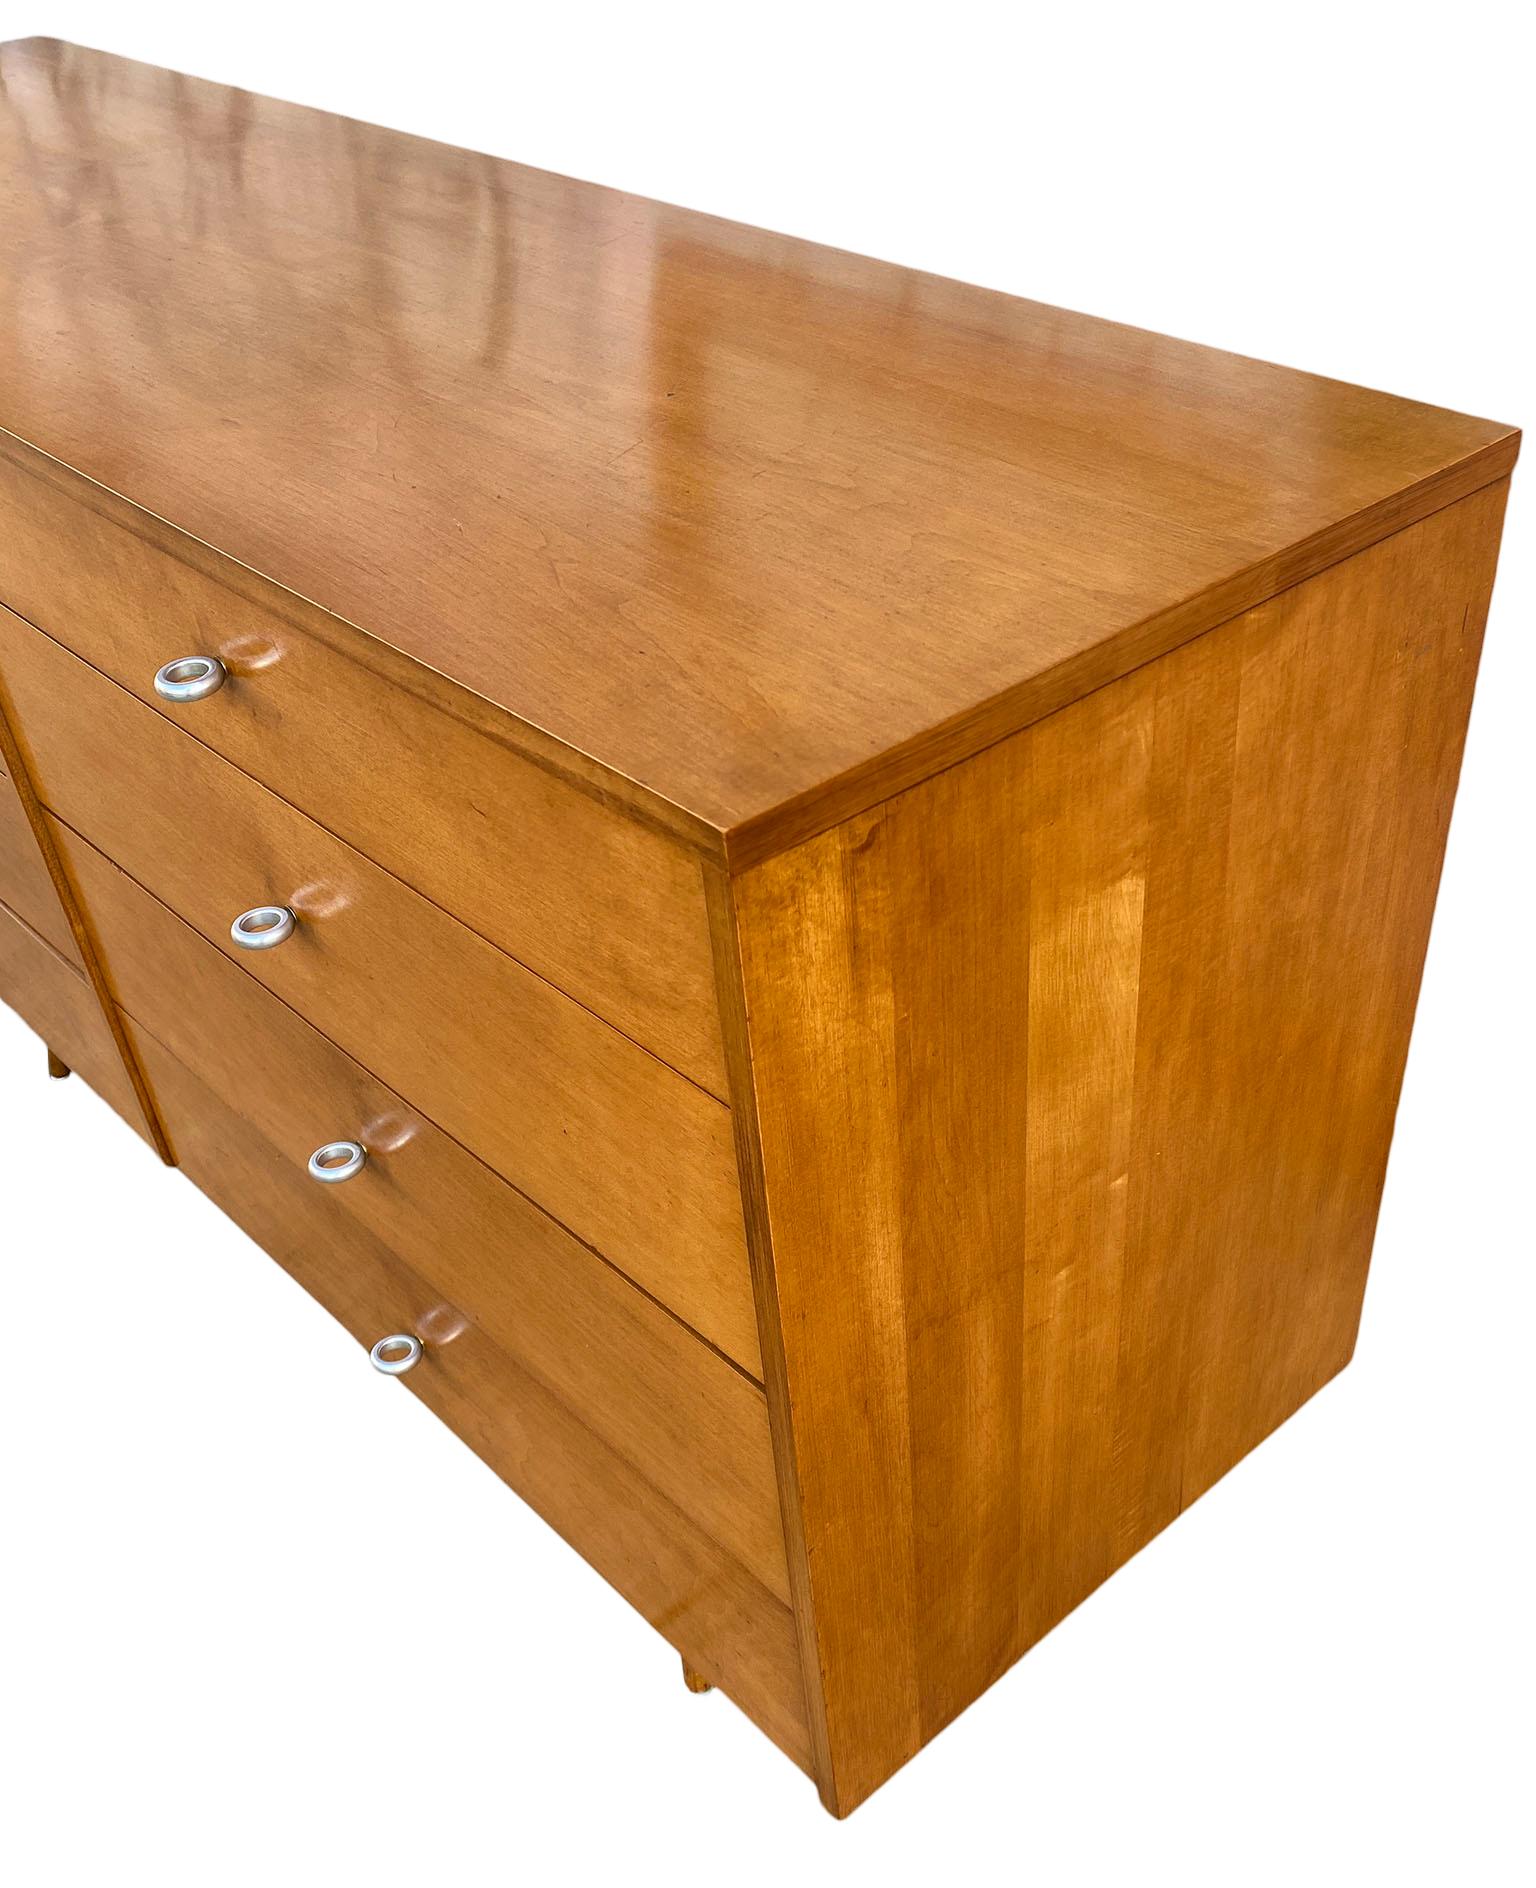 20th Century Midcentury Paul McCobb 8-Drawer Dresser Credenza #1507 Maple Ring Pulls